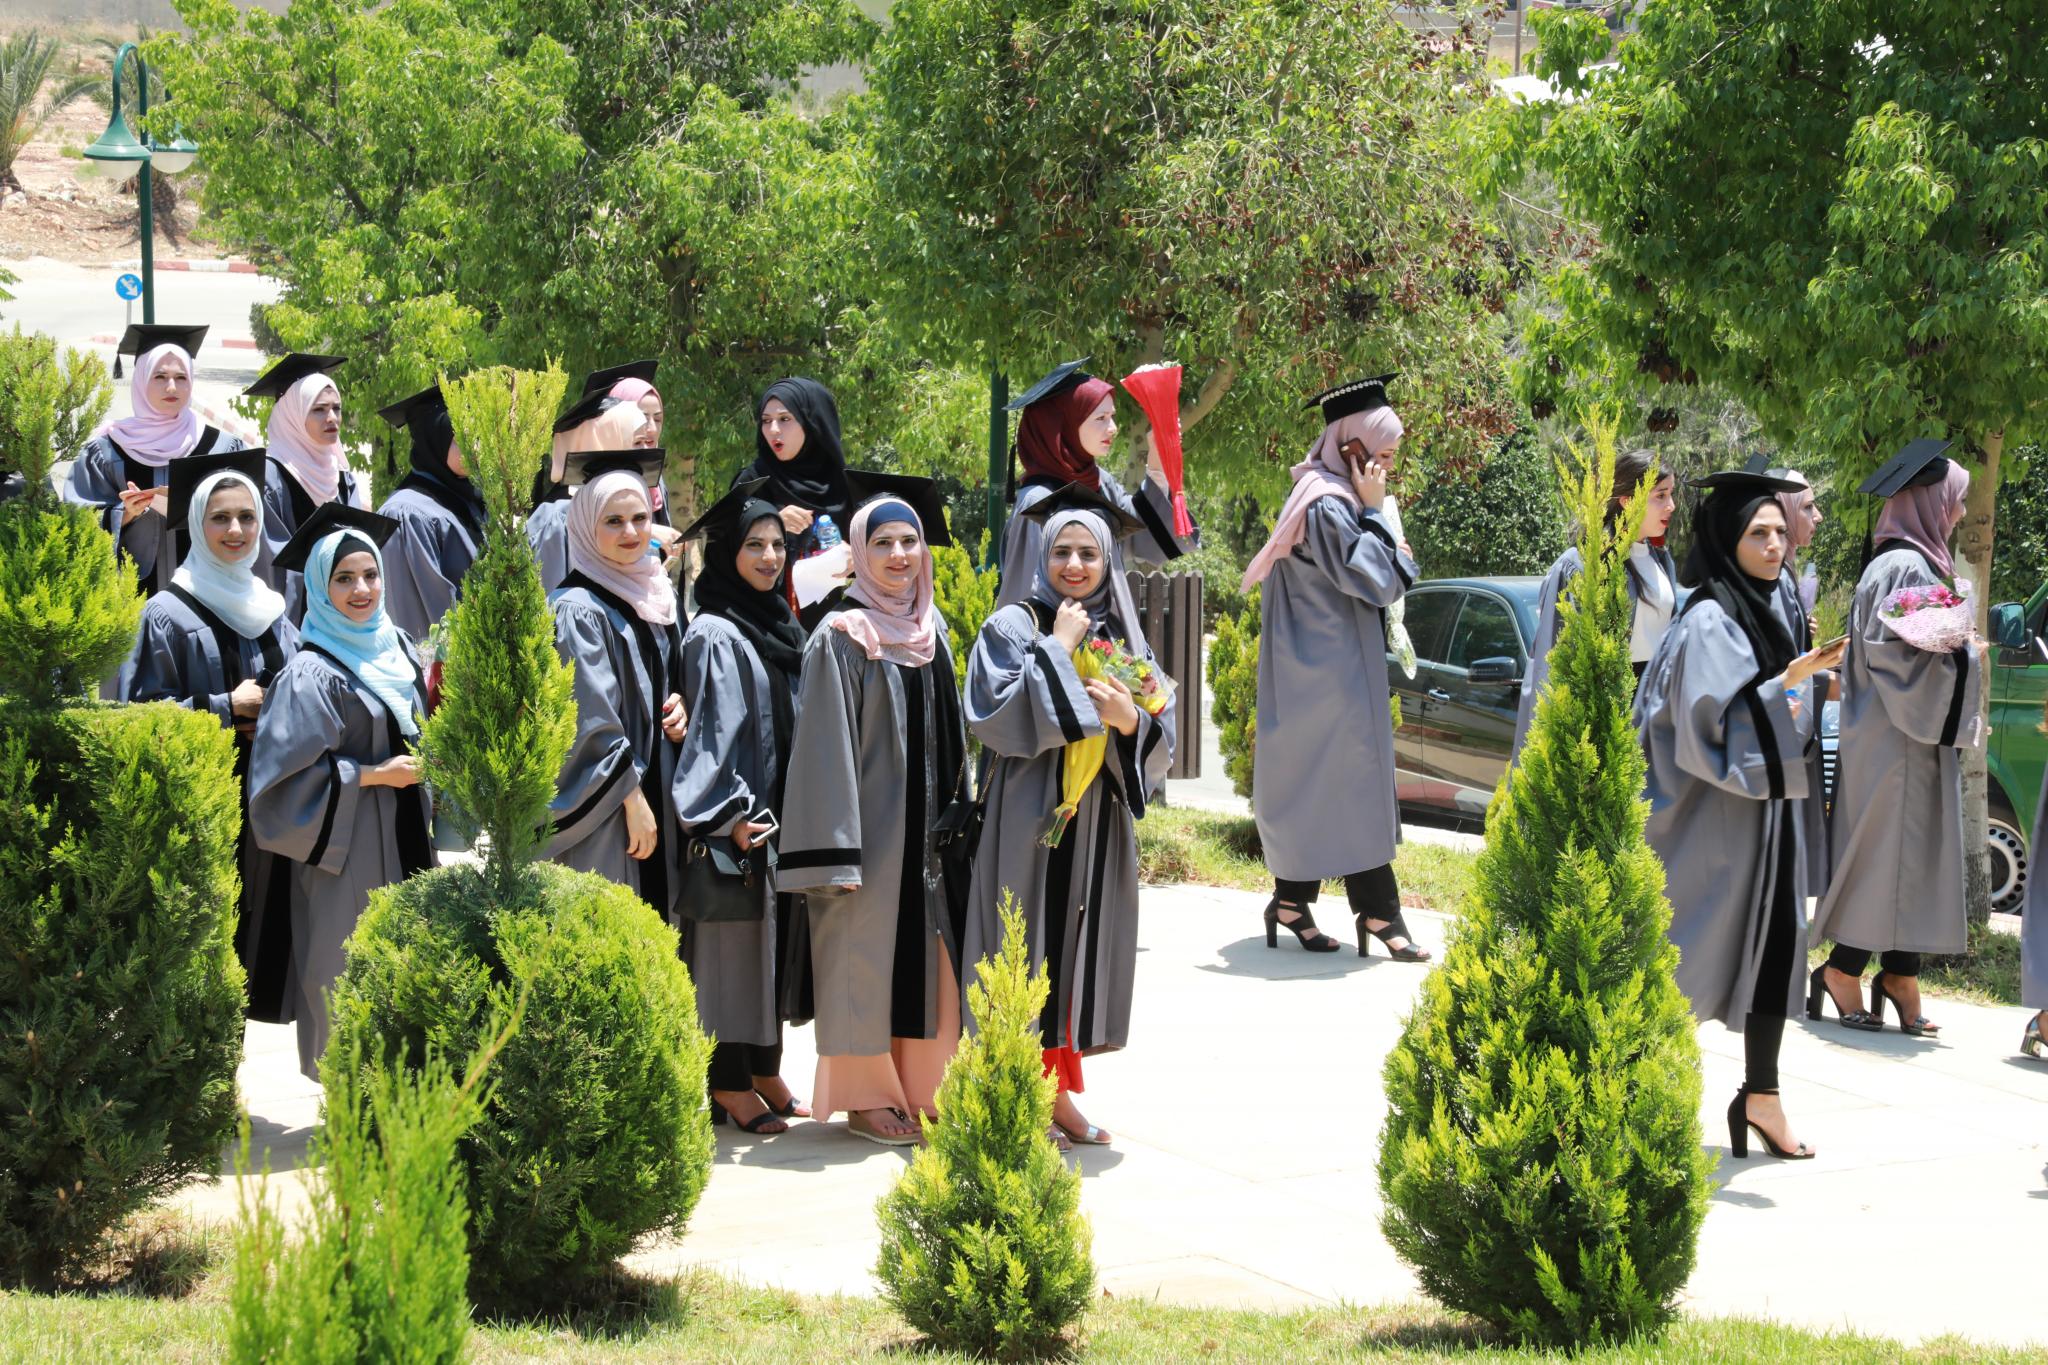 The fifteenth graduation ceremony